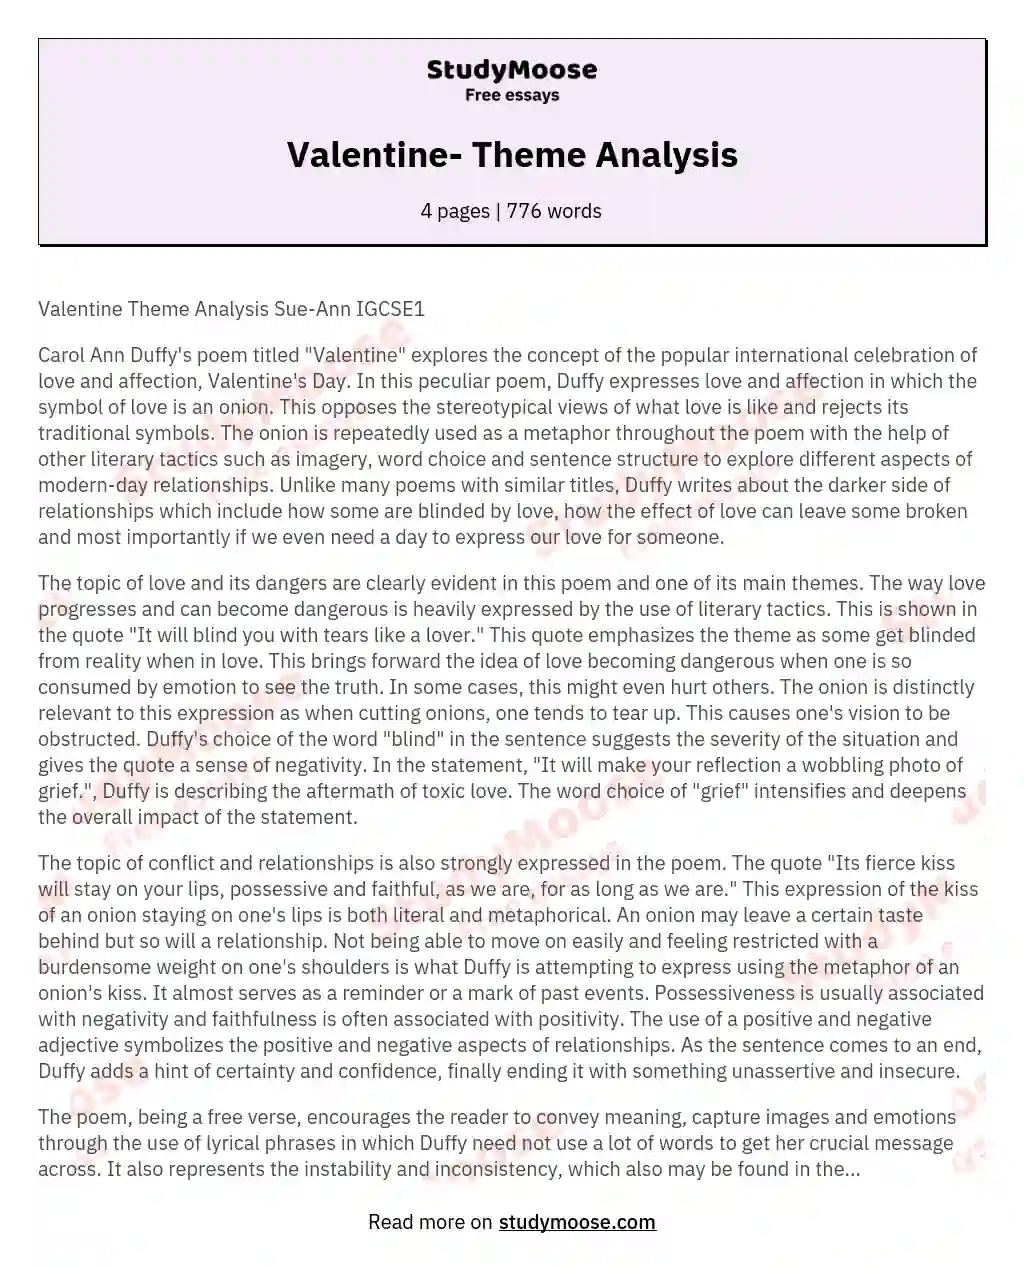 Valentine- Theme Analysis essay